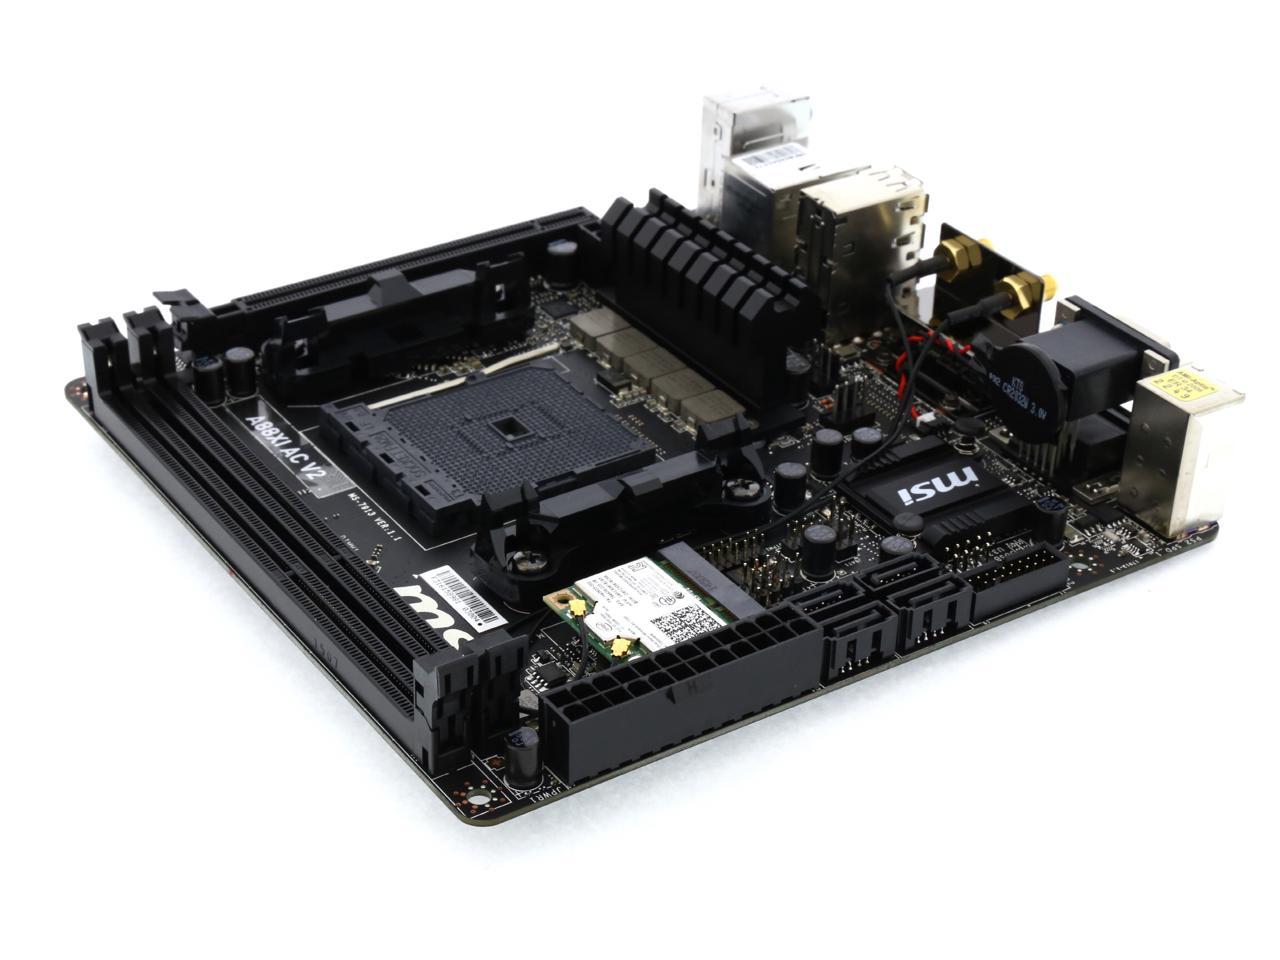 MSI A88XI AC V2 FM2+ Mini ITX AMD Motherboard - Newegg.com